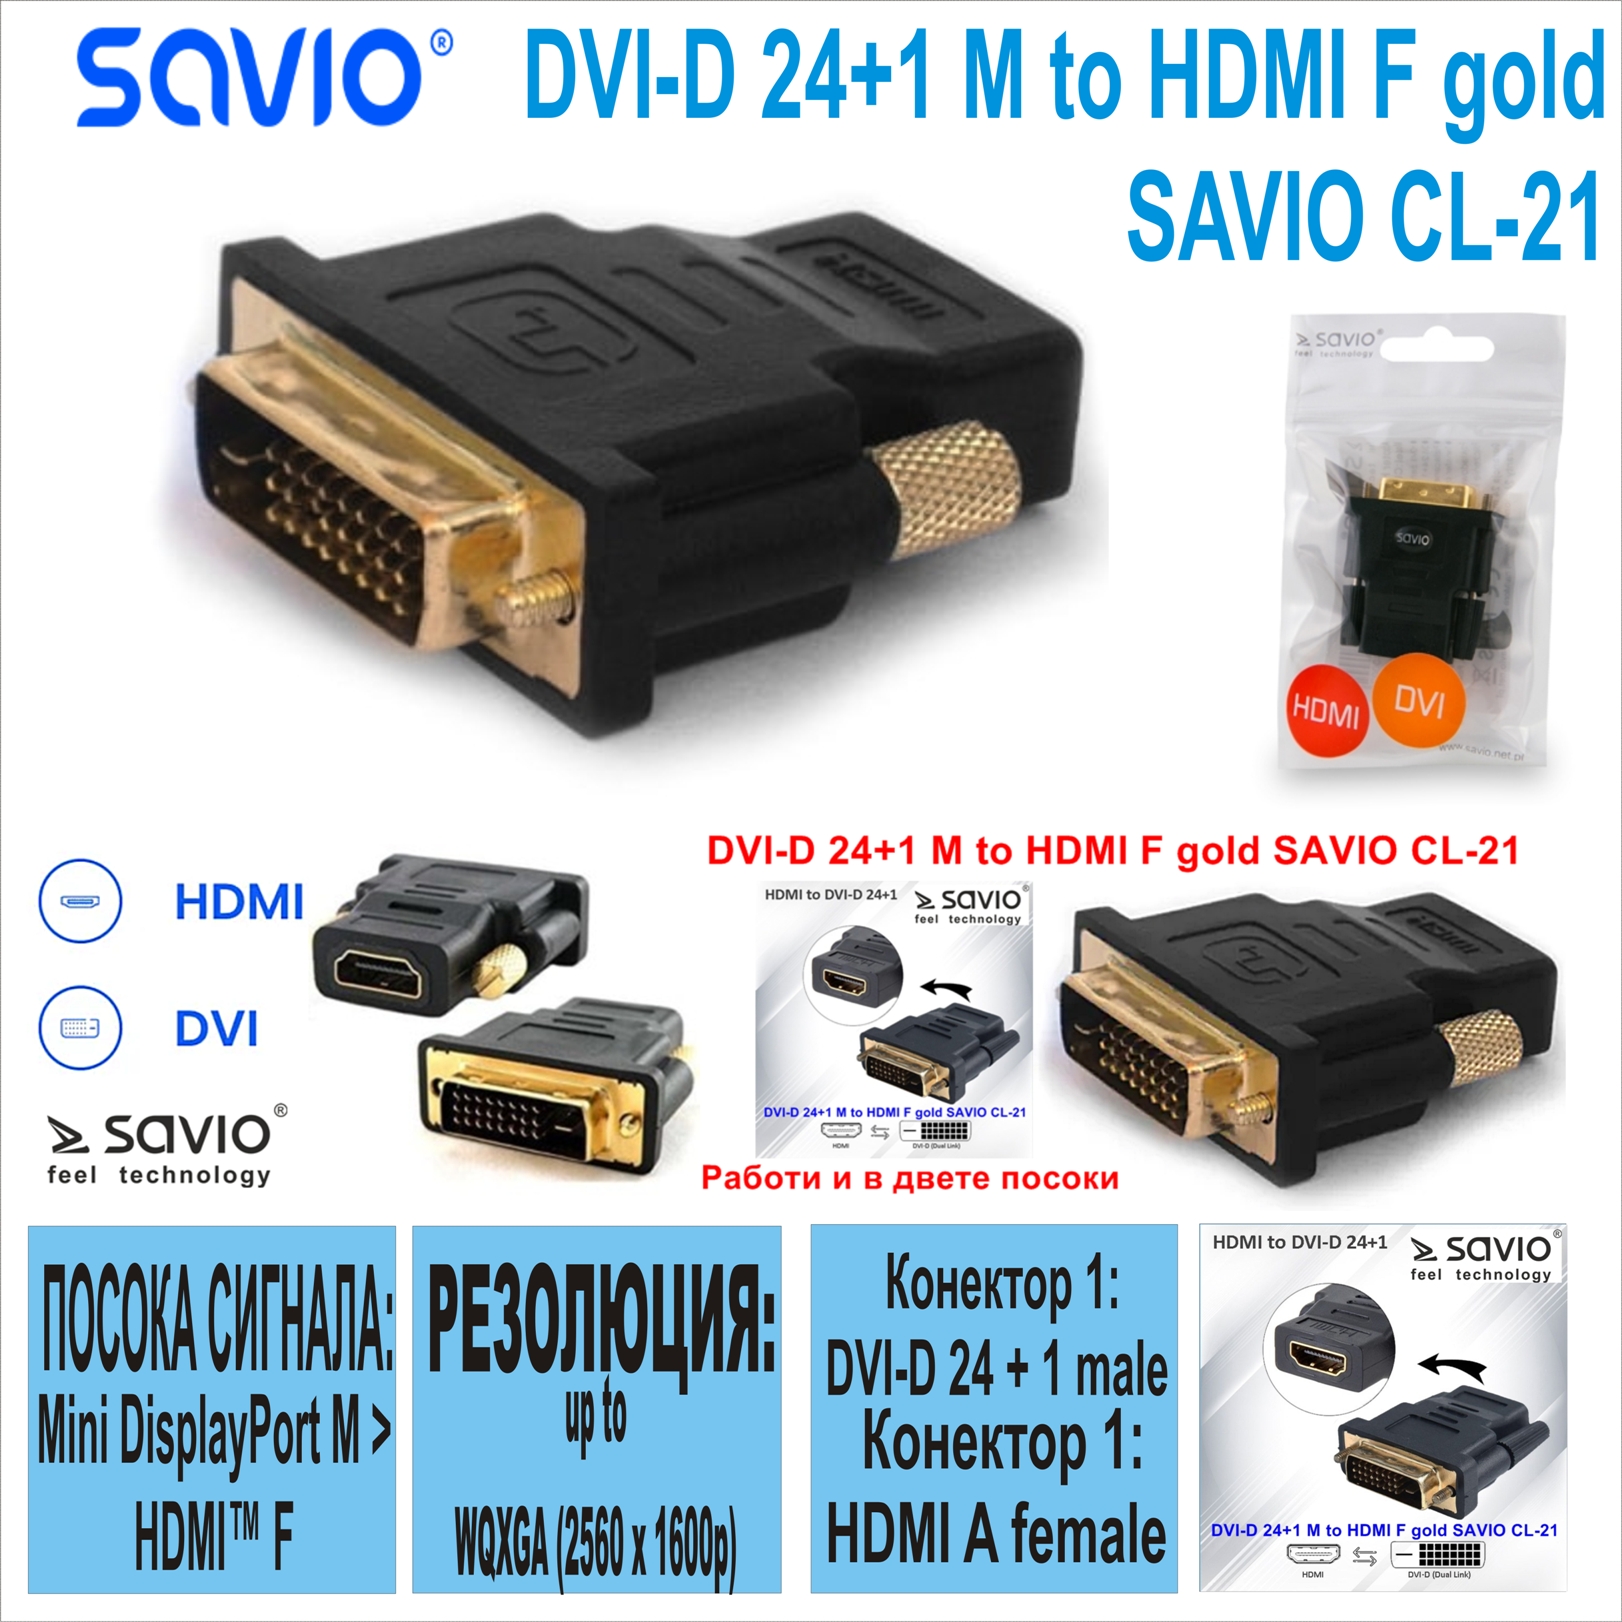 DVI-D 24+1 M to HDMI F gold SAVIO CL-21